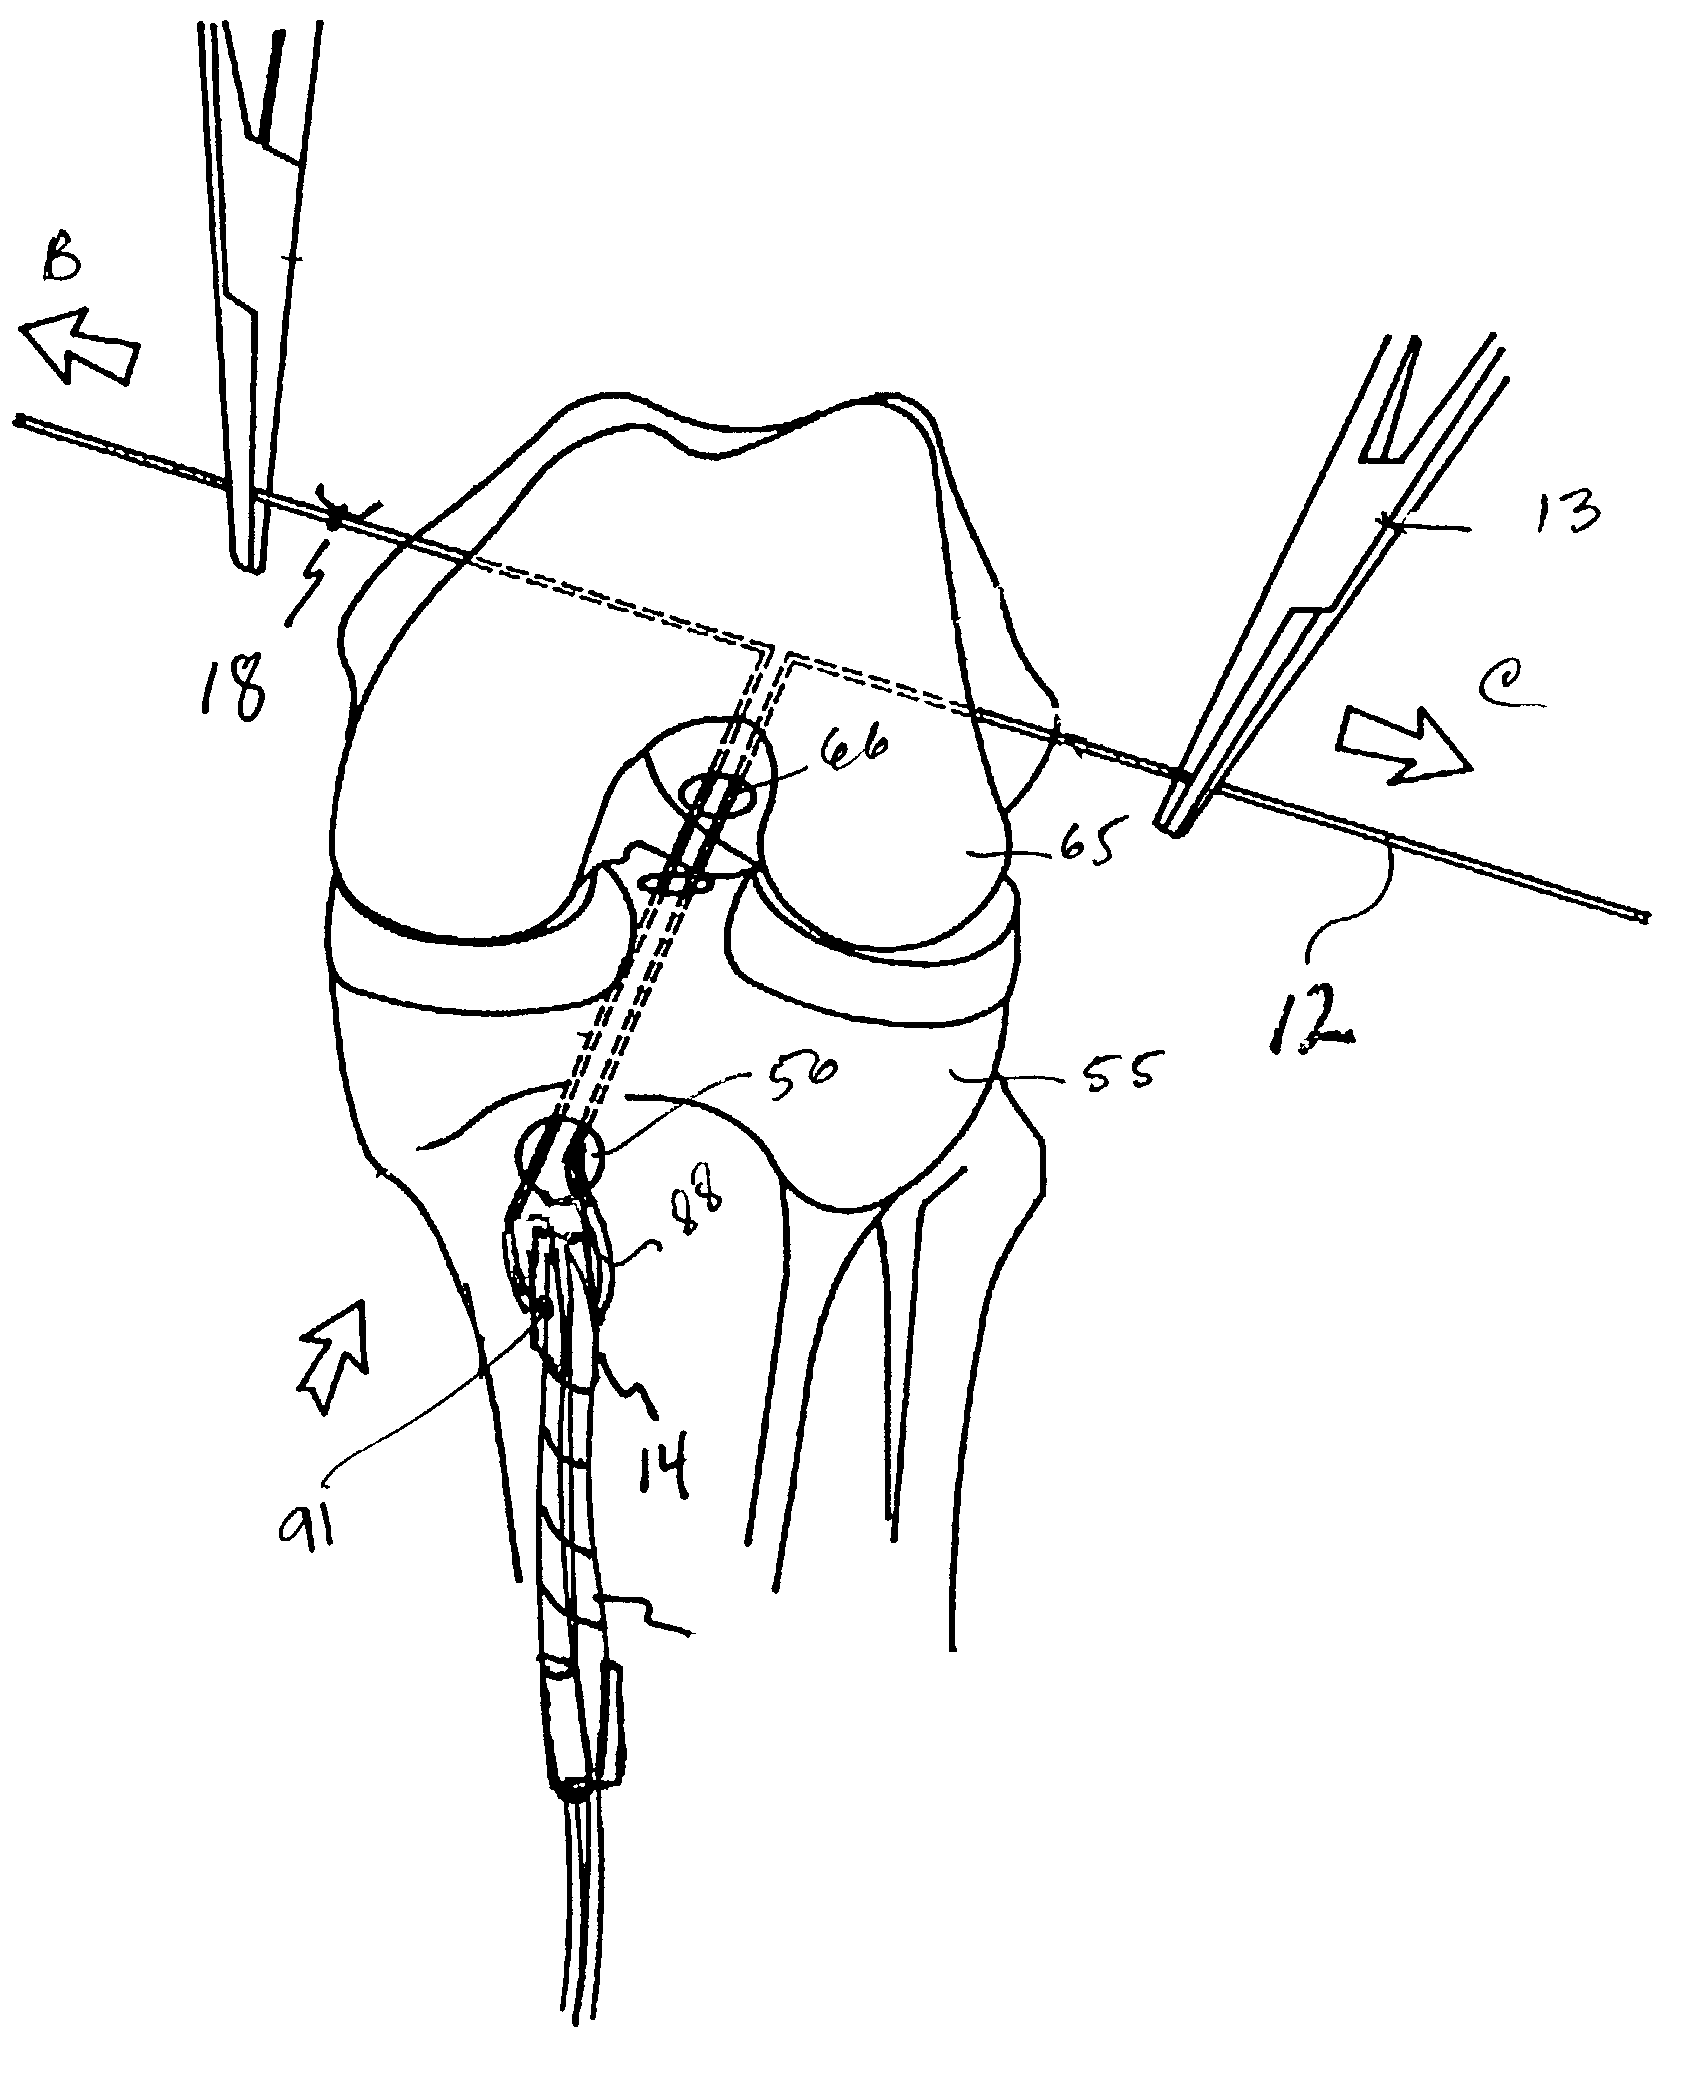 Transverse fixation technique for ACL reconstruction using bone-tendon-bone graft